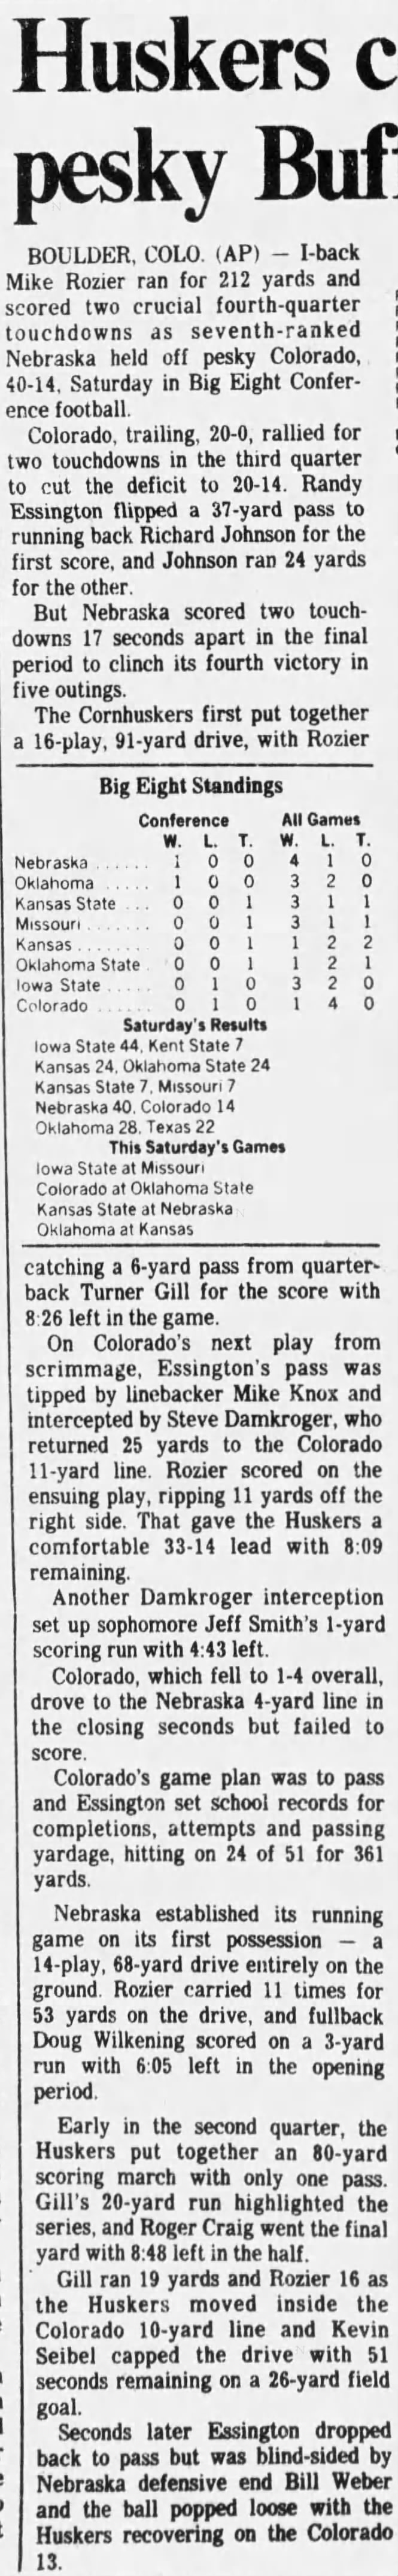 1982 Nebraska-Colorado football AP